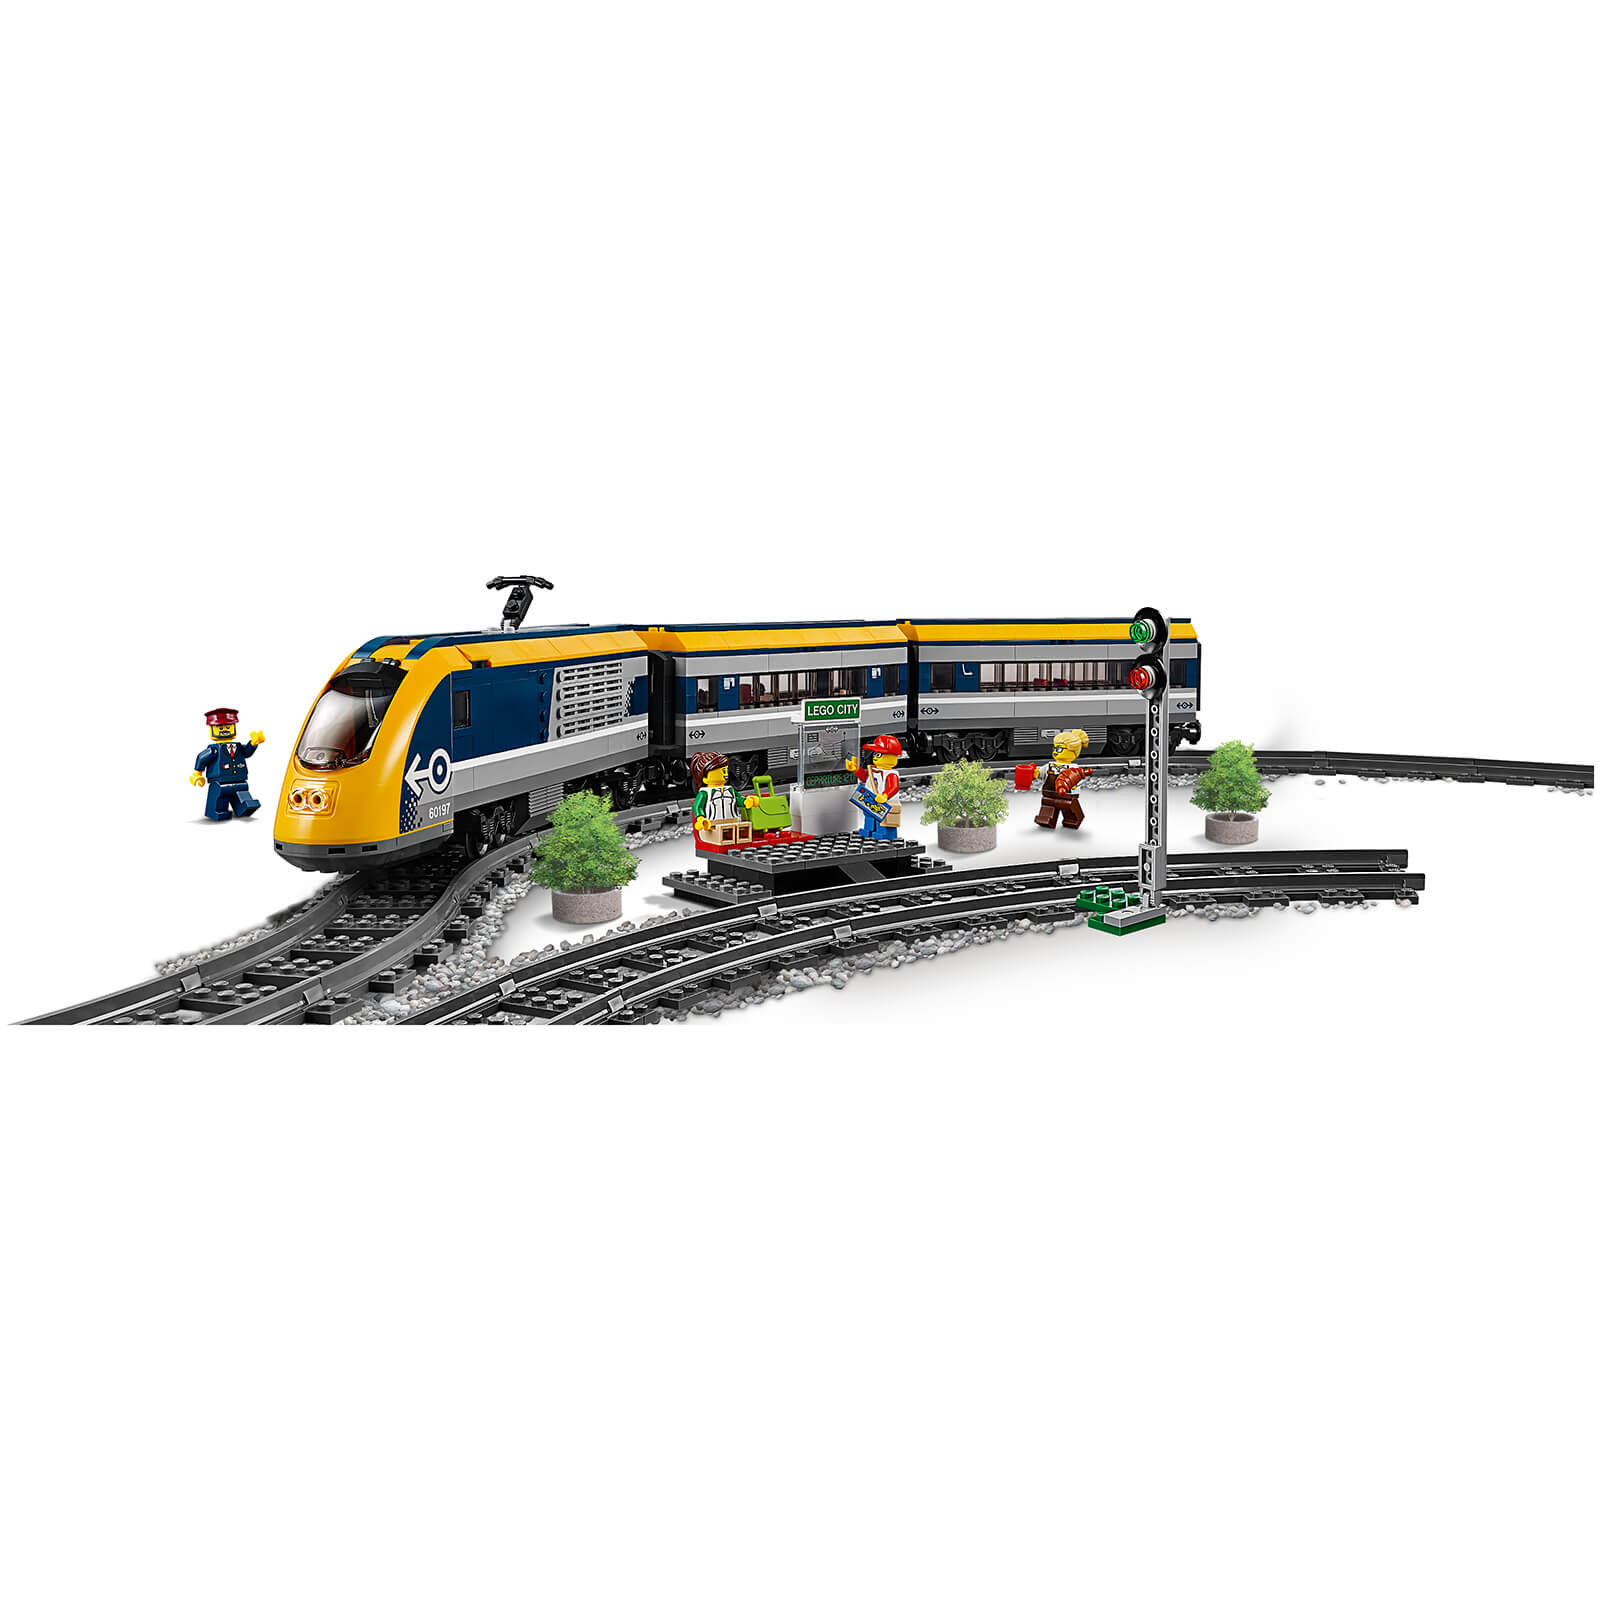 LEGO City: Personenzug & Gleis Bluetooth RC Set (60197) 3